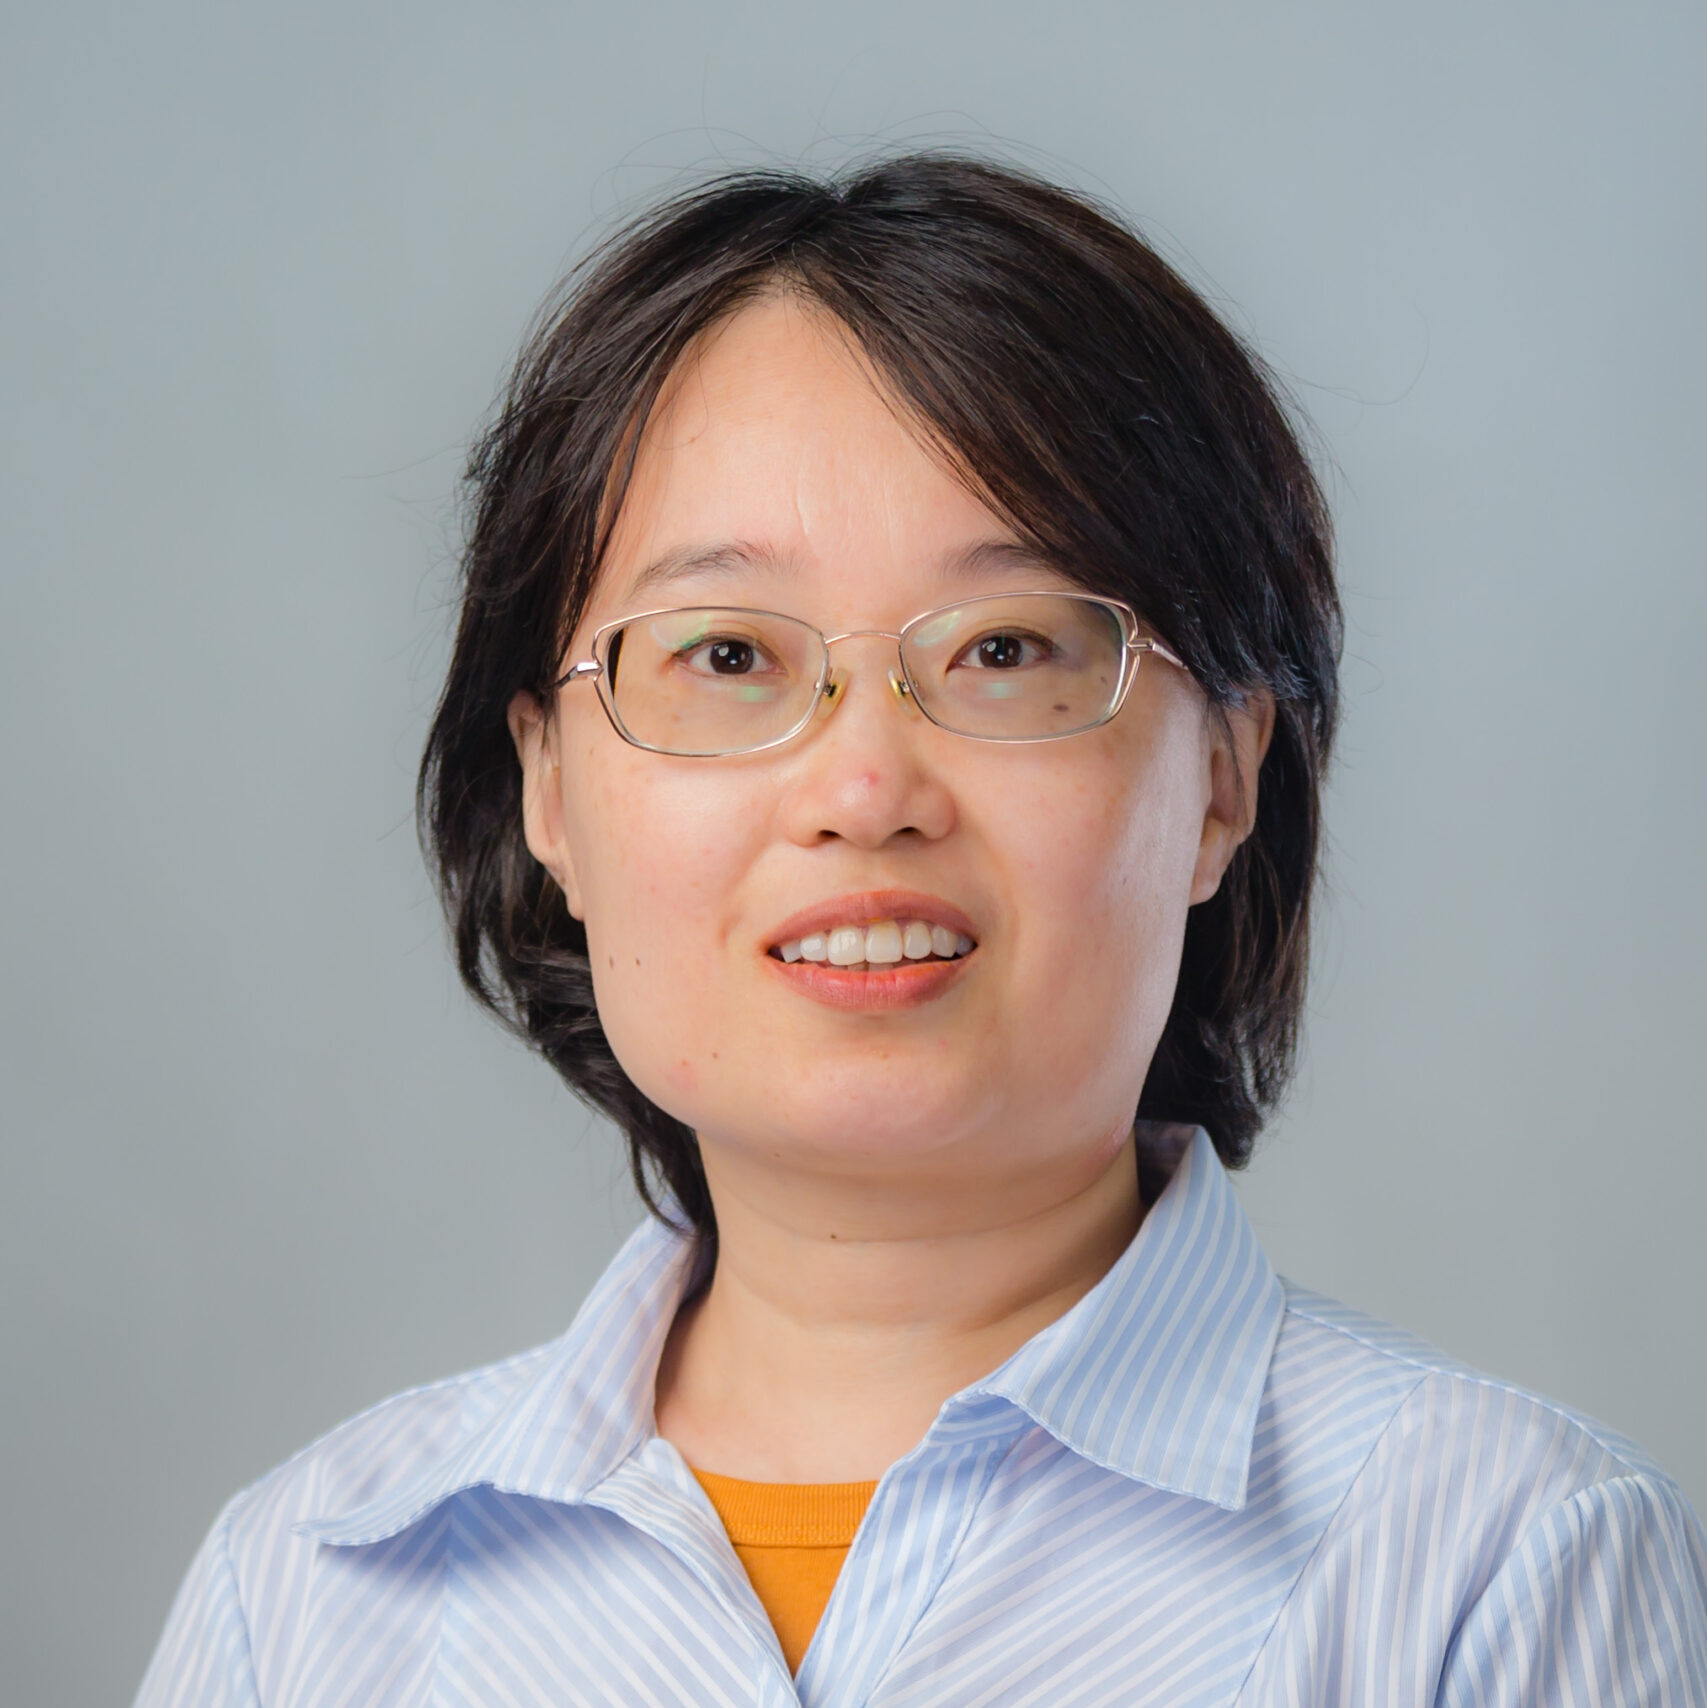 Portrait of Hathaway Xie, a Mandarin teacher at Clifford International School in Panyu, Guangzhou, China